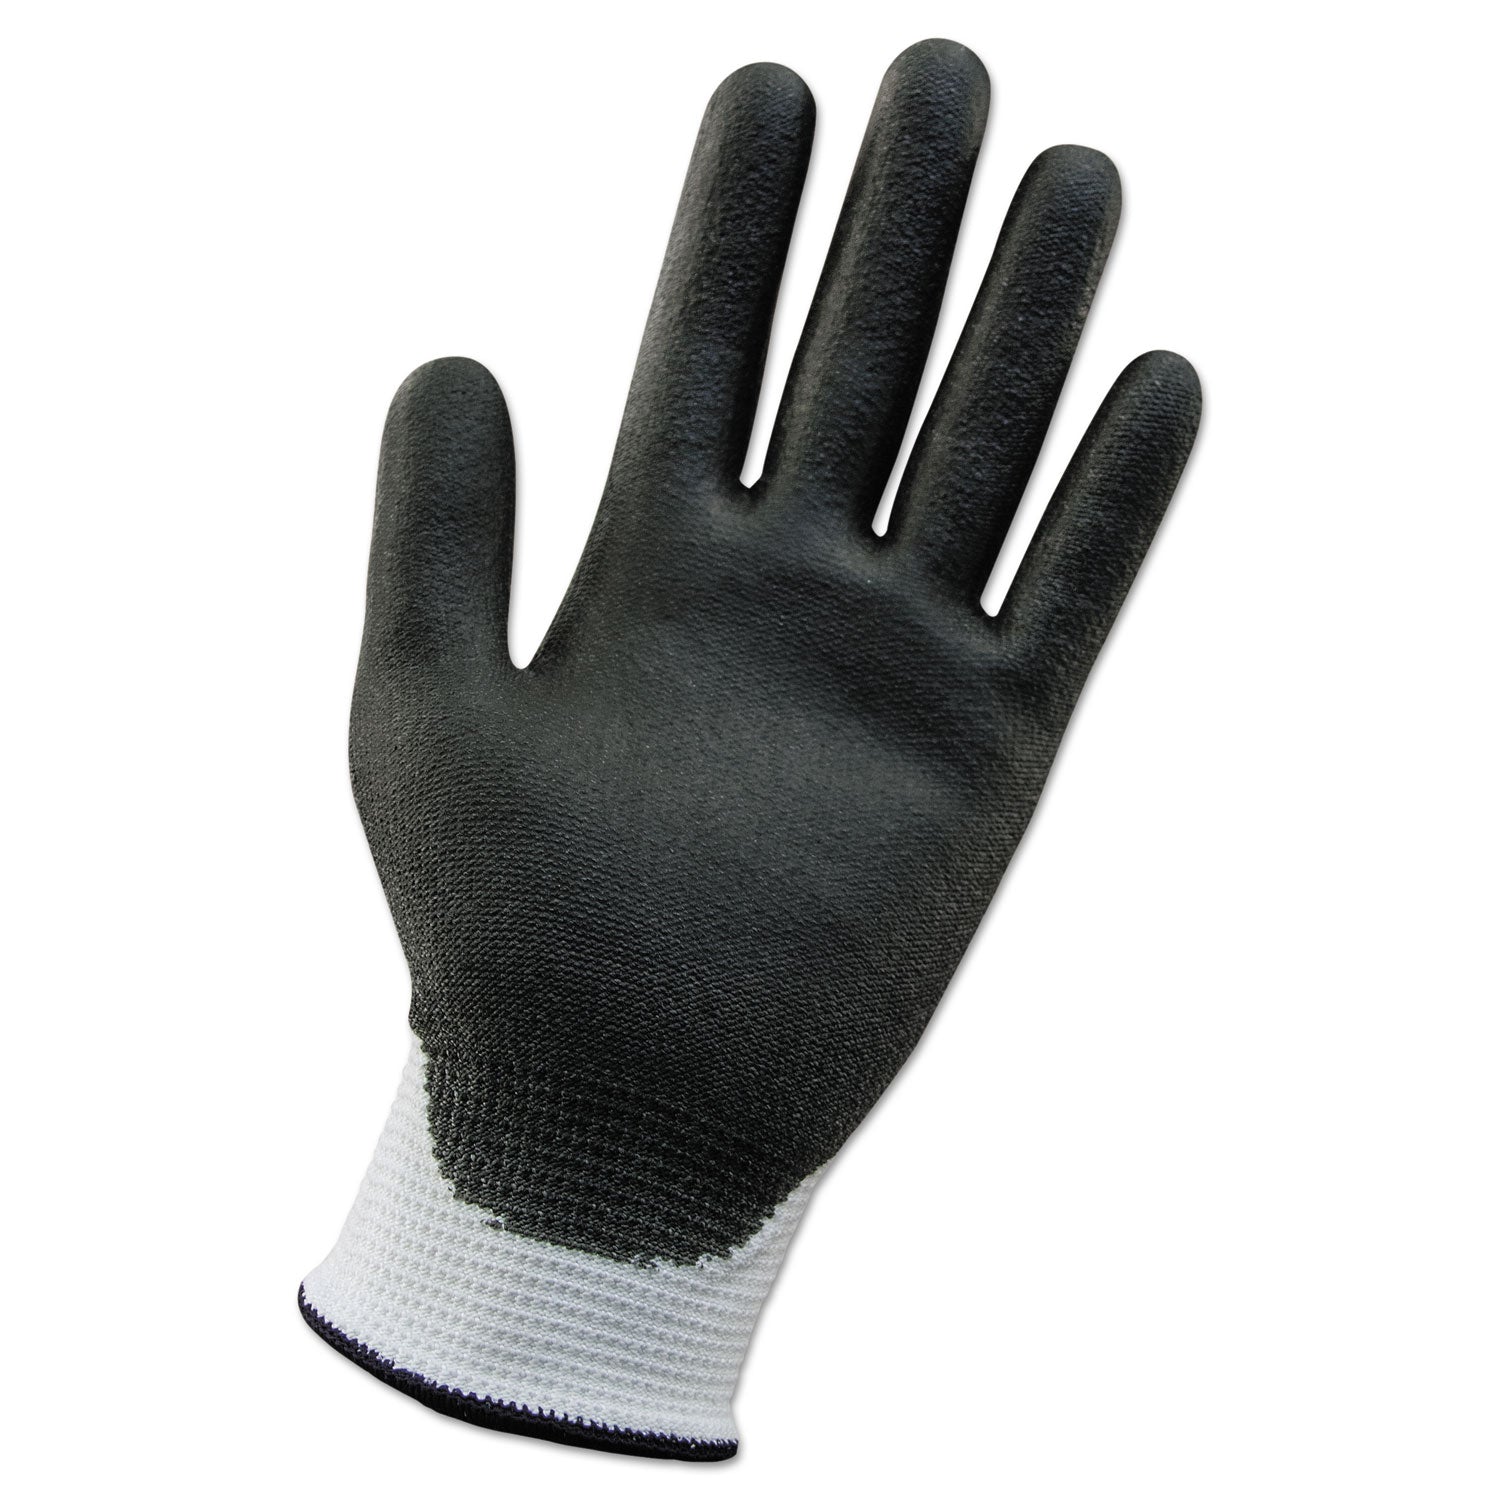 g60-ansi-level-2-cut-resistant-gloves-250-mm-length-x-large-size-10-white-black-12-pairs_kcc38692 - 1